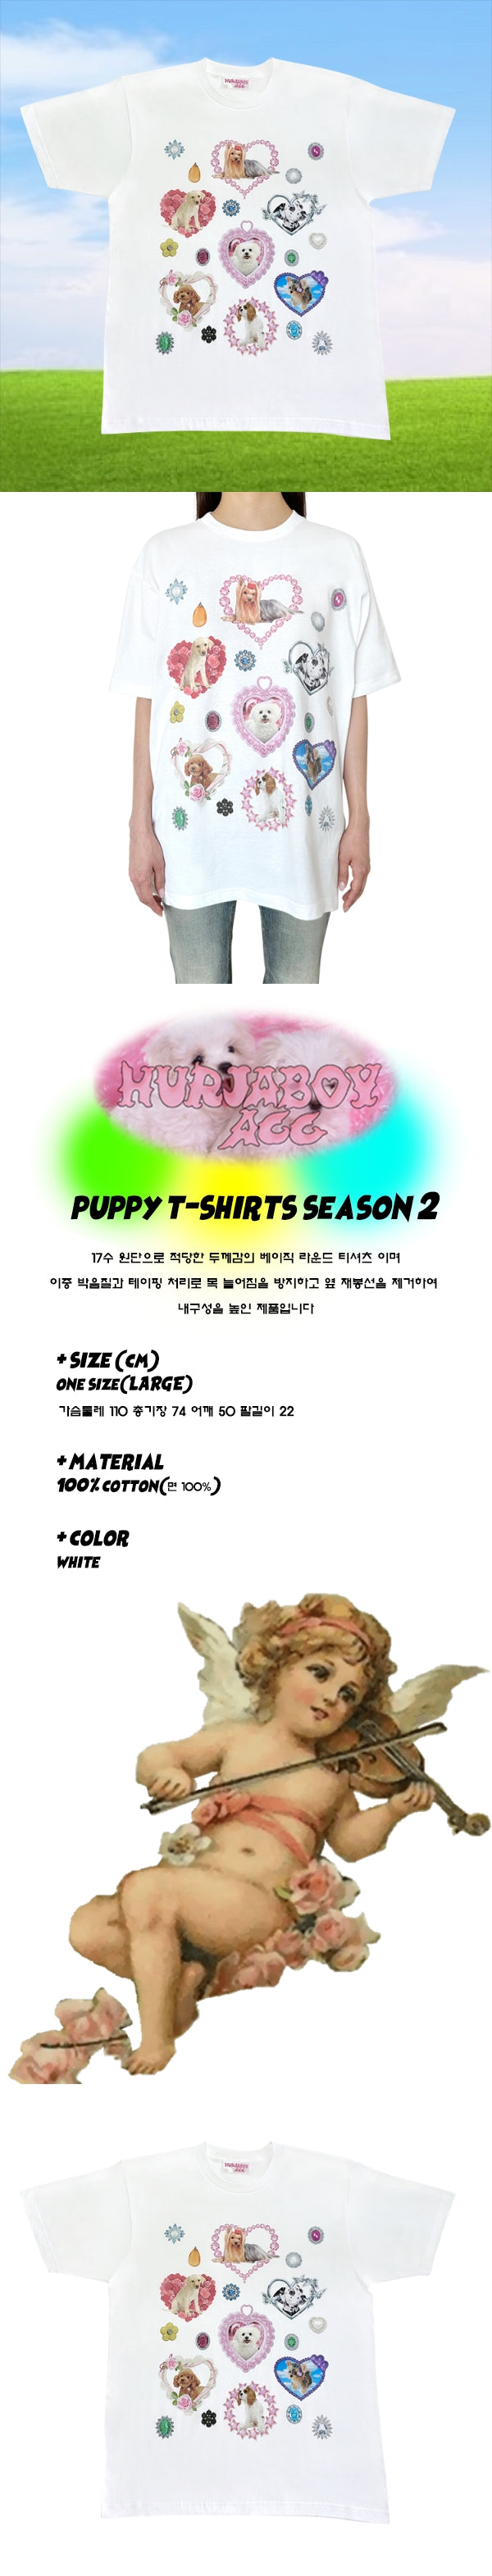 Puppy t-shirts S2